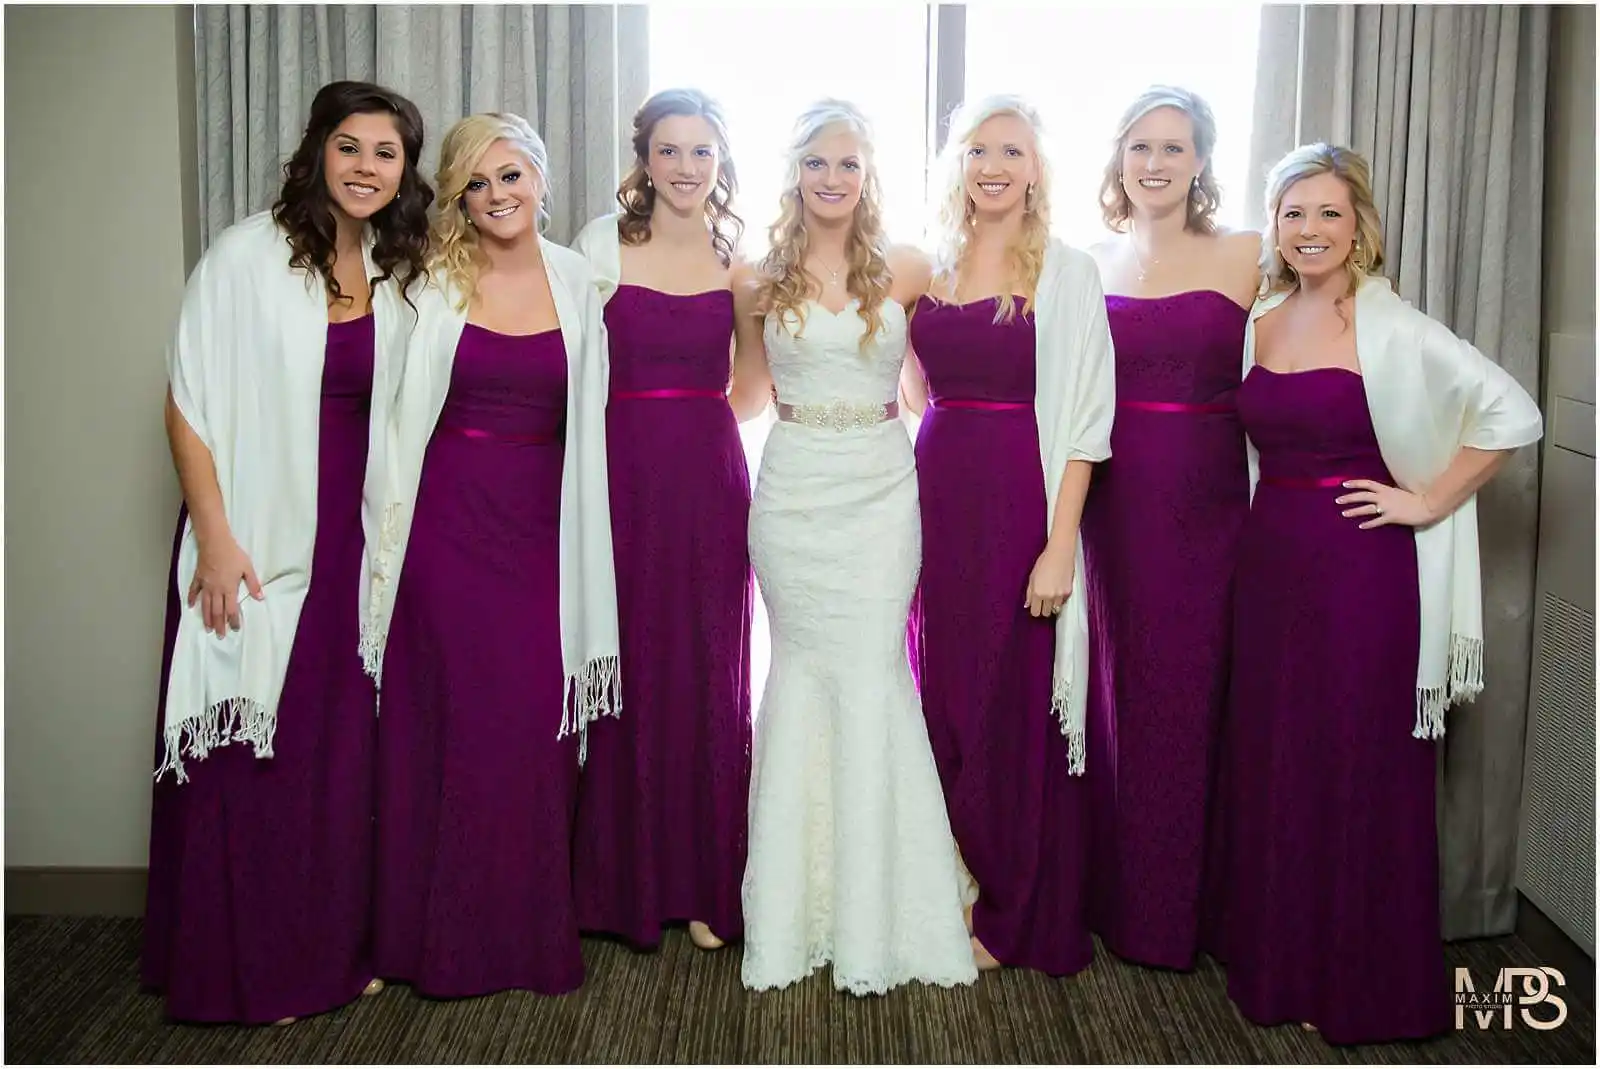 Bride and bridesmaids in elegant purple dresses at Covington KY wedding.